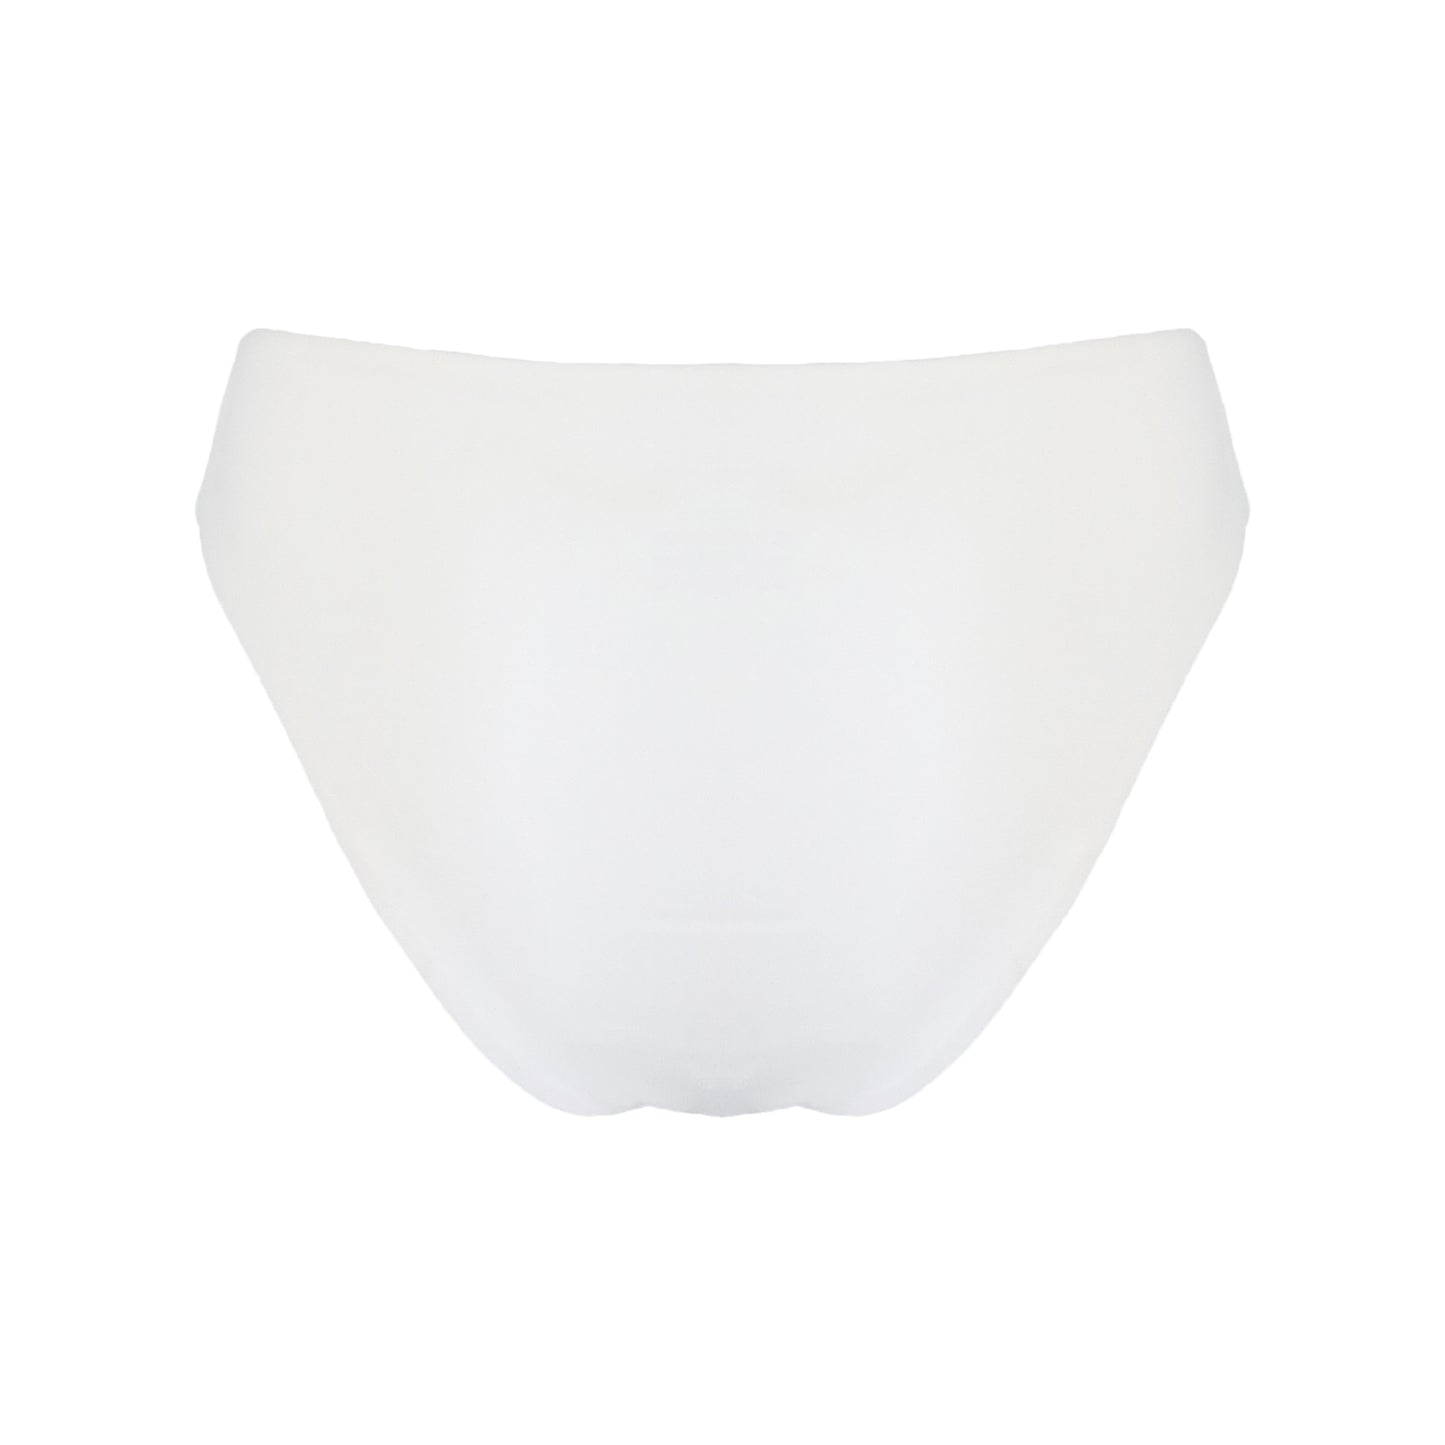 Back of white high waist cheeky bikini bottom with high cut legs, shapewear benefits, and full bum coverage.